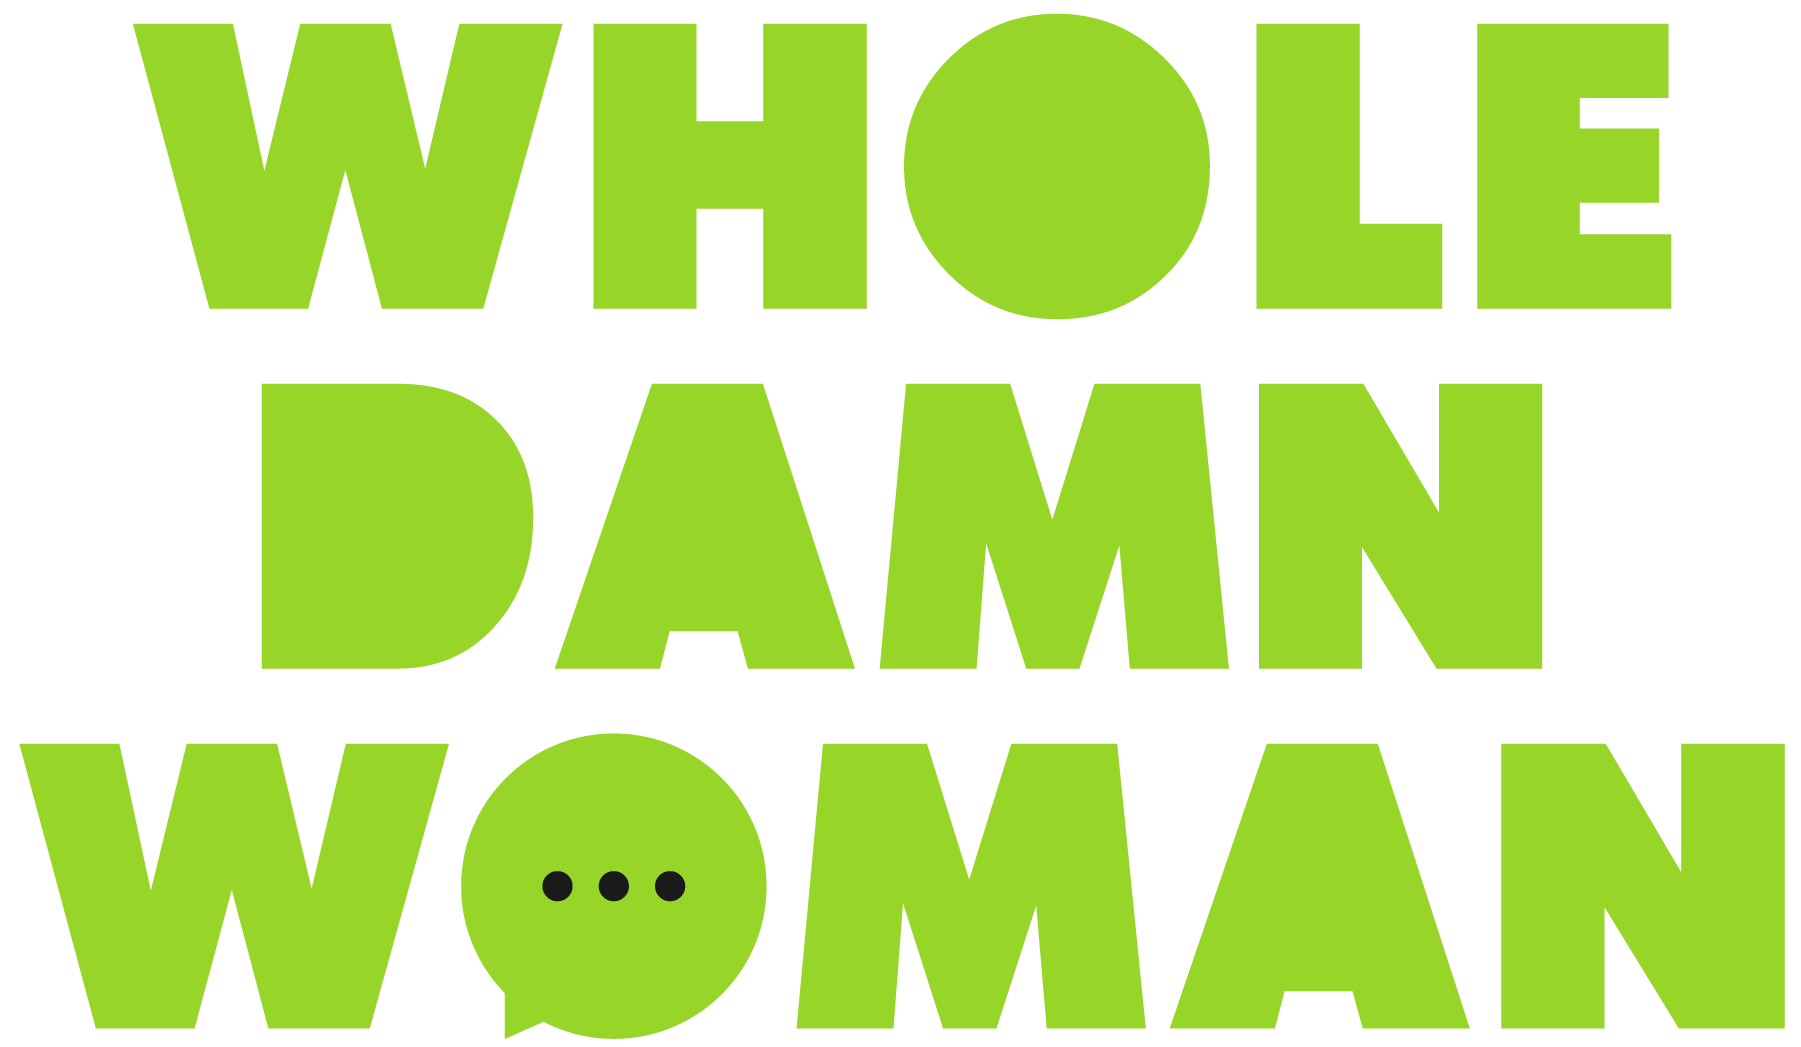 Whole Damn Woman logo